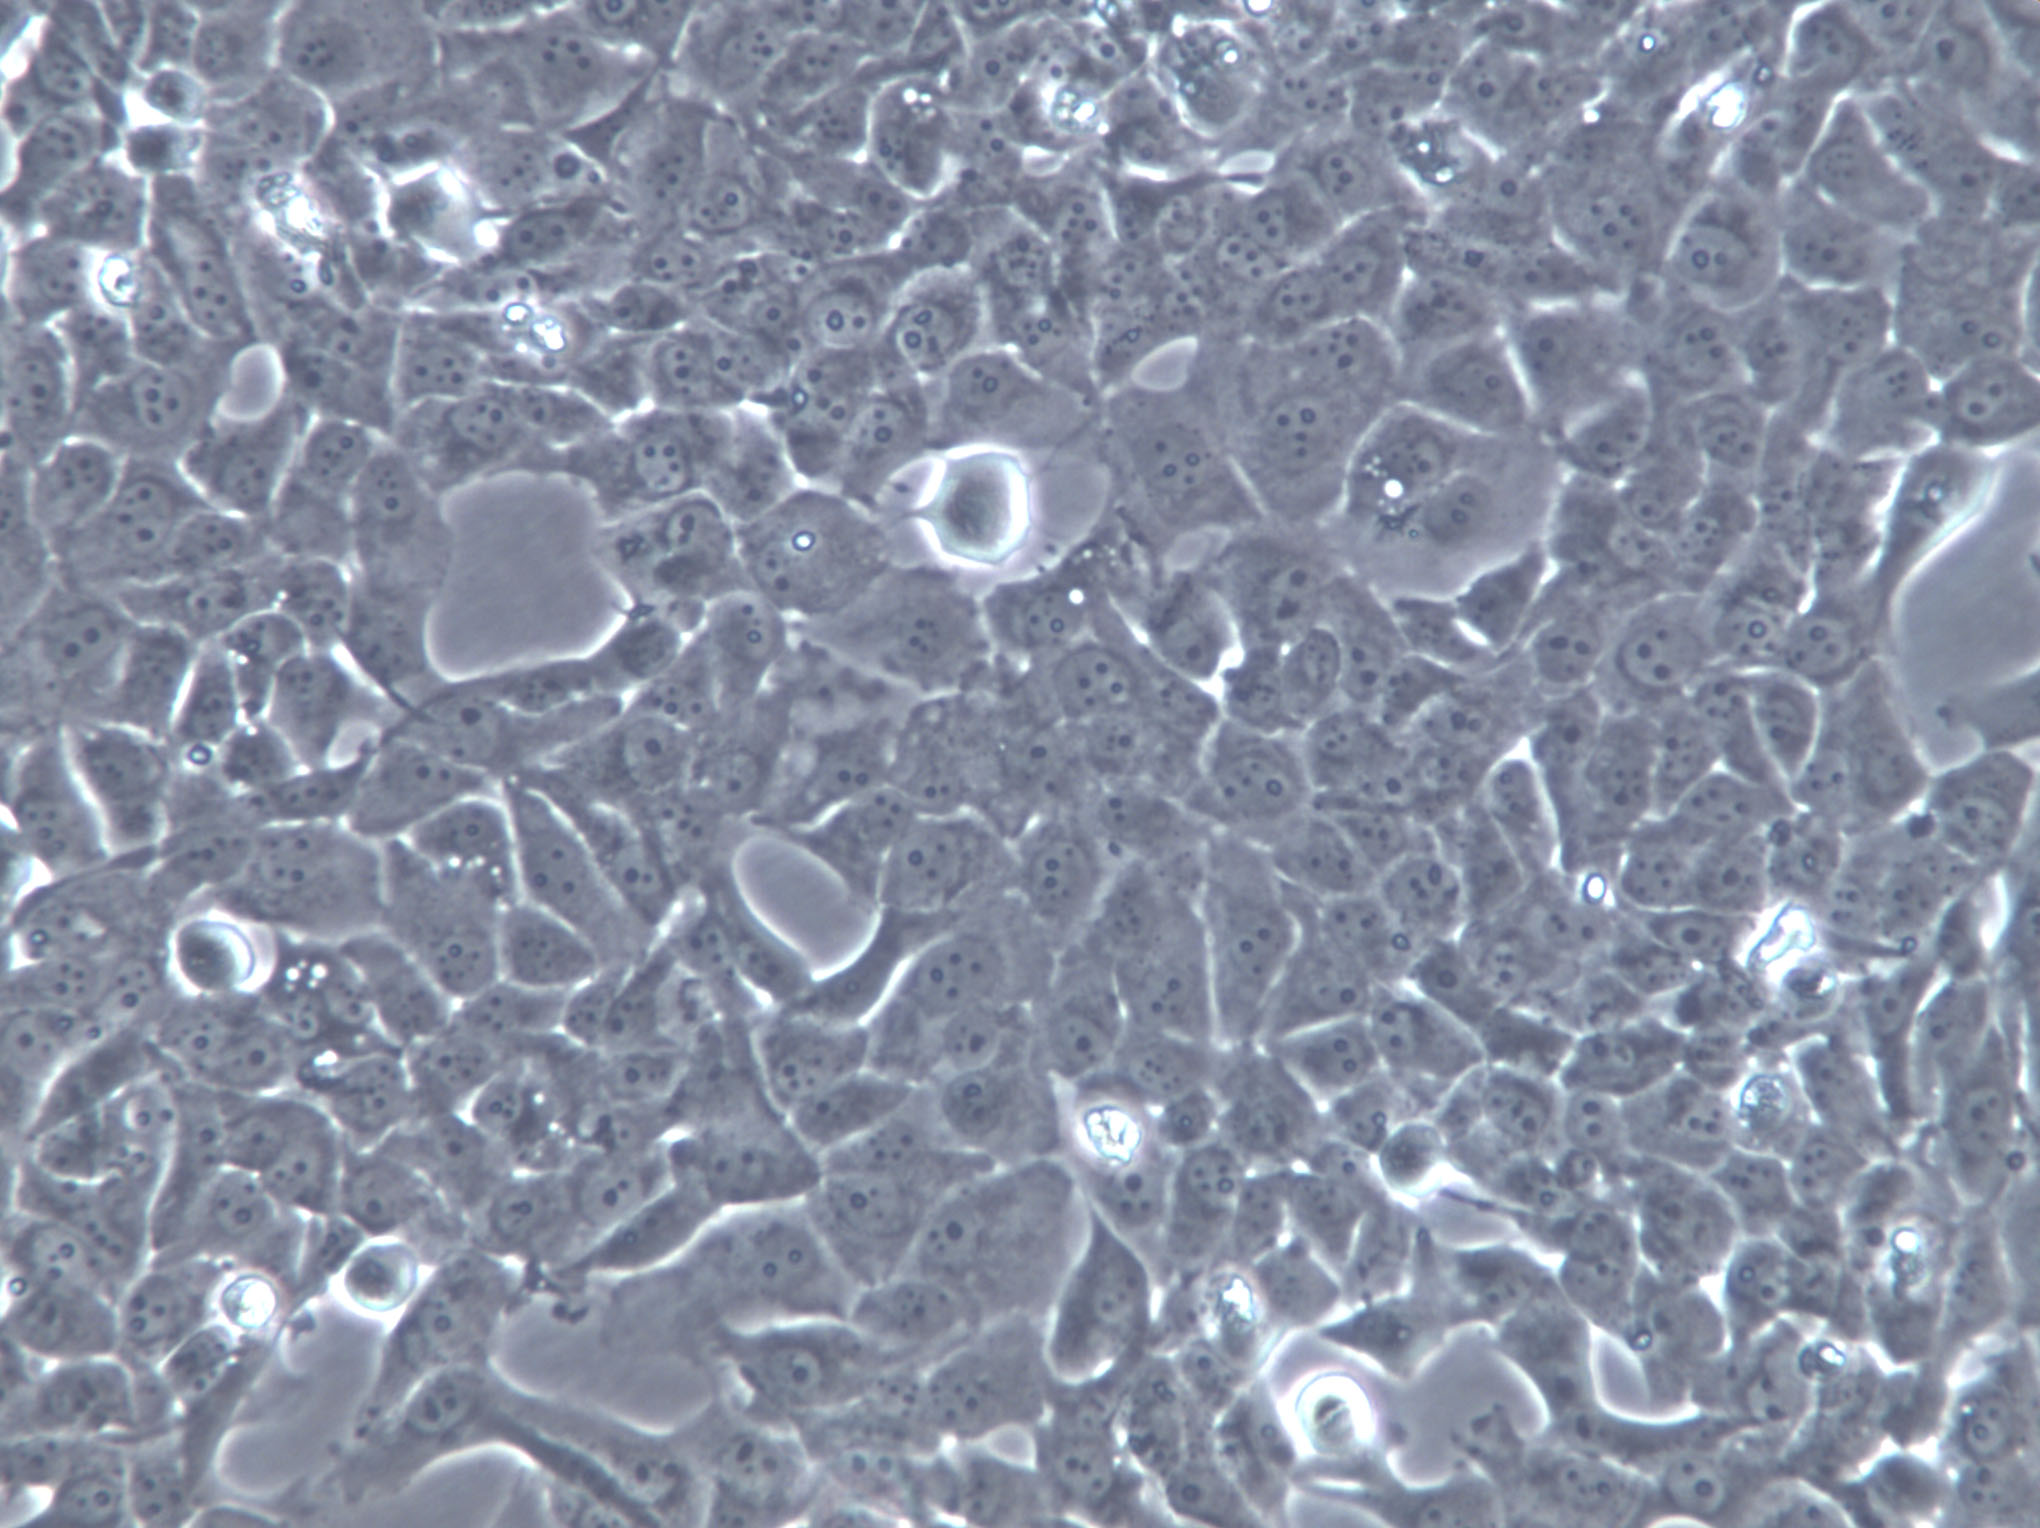 Hep-G2 Cells|人肝癌克隆细胞,Hep-G2 Cells